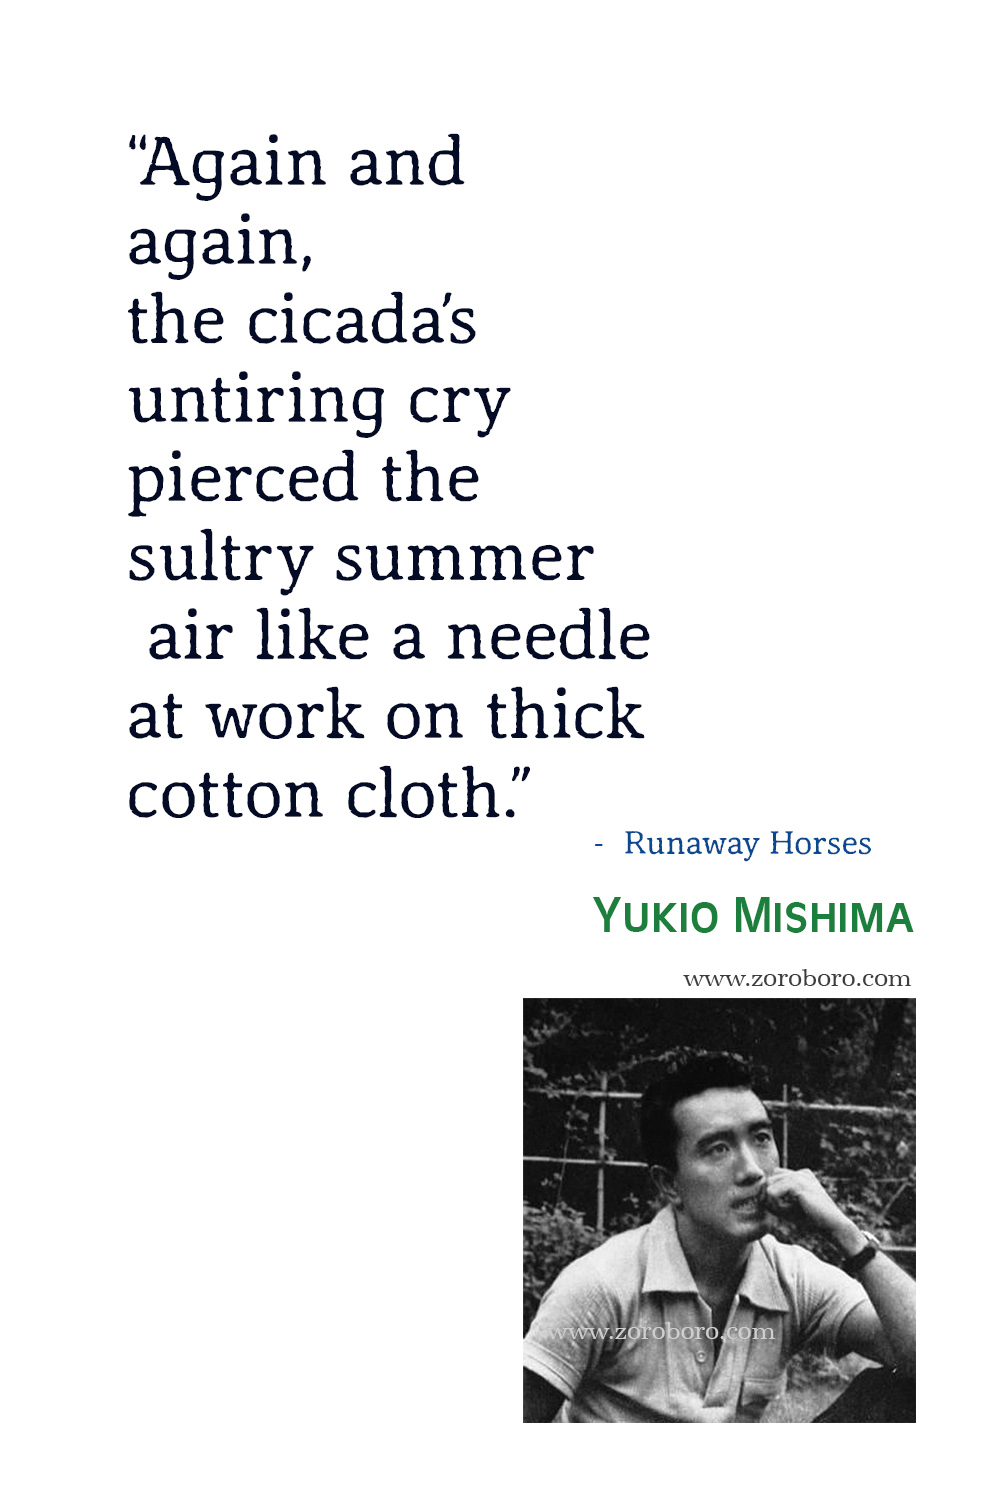 Yukio Mishima Quotes, Yukio Mishima Books, Confessions of a Mask, Spring Snow Novel by Yukio Mishima Quotes, Yukio Mishima Quotes.